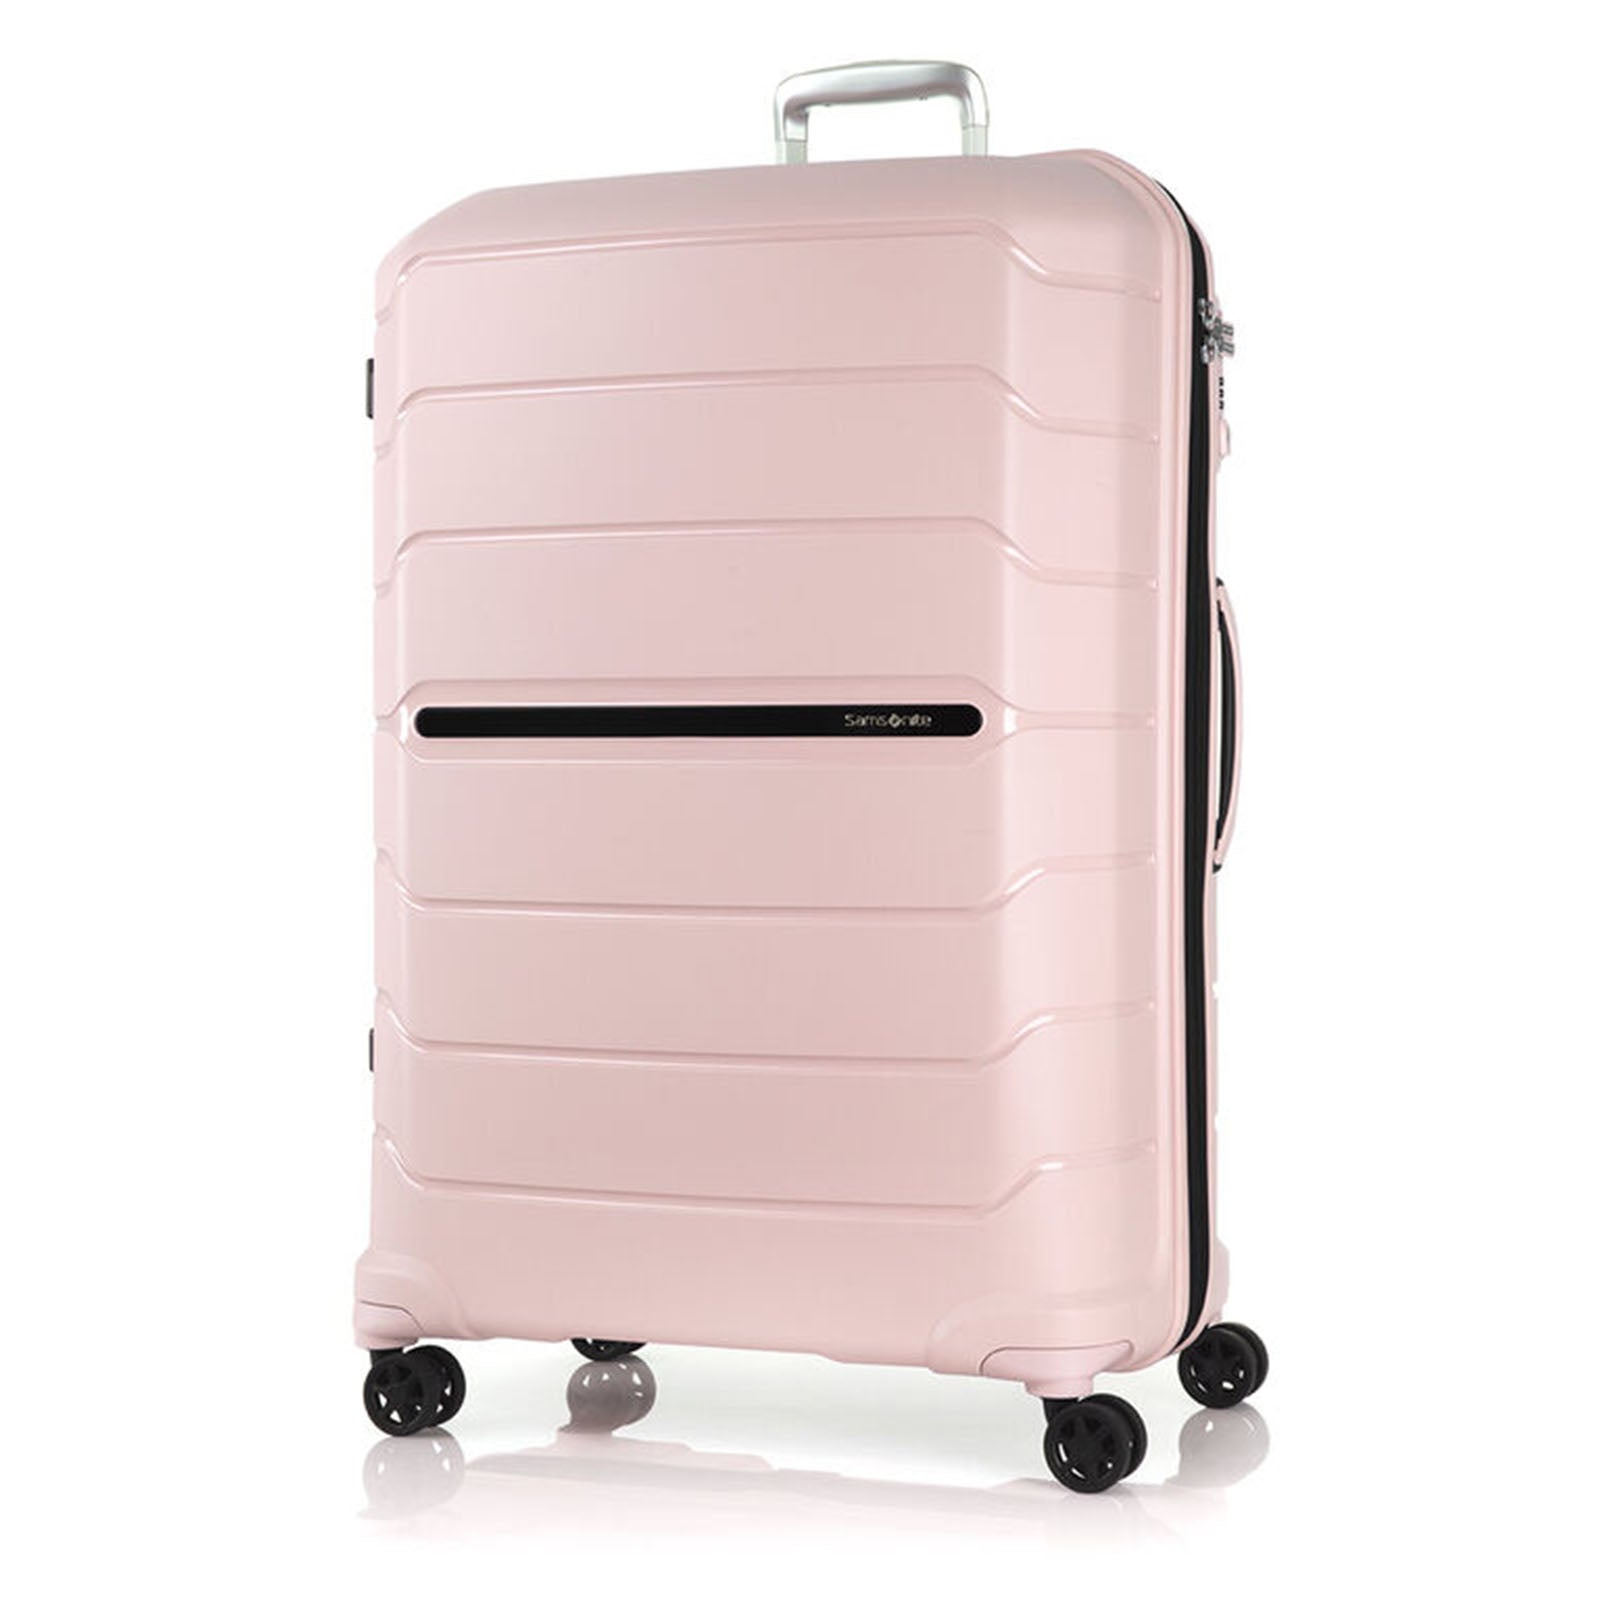 Samsonite-Oc2lite-81cm-Suitcase-Soft-Pink-Front-Angle